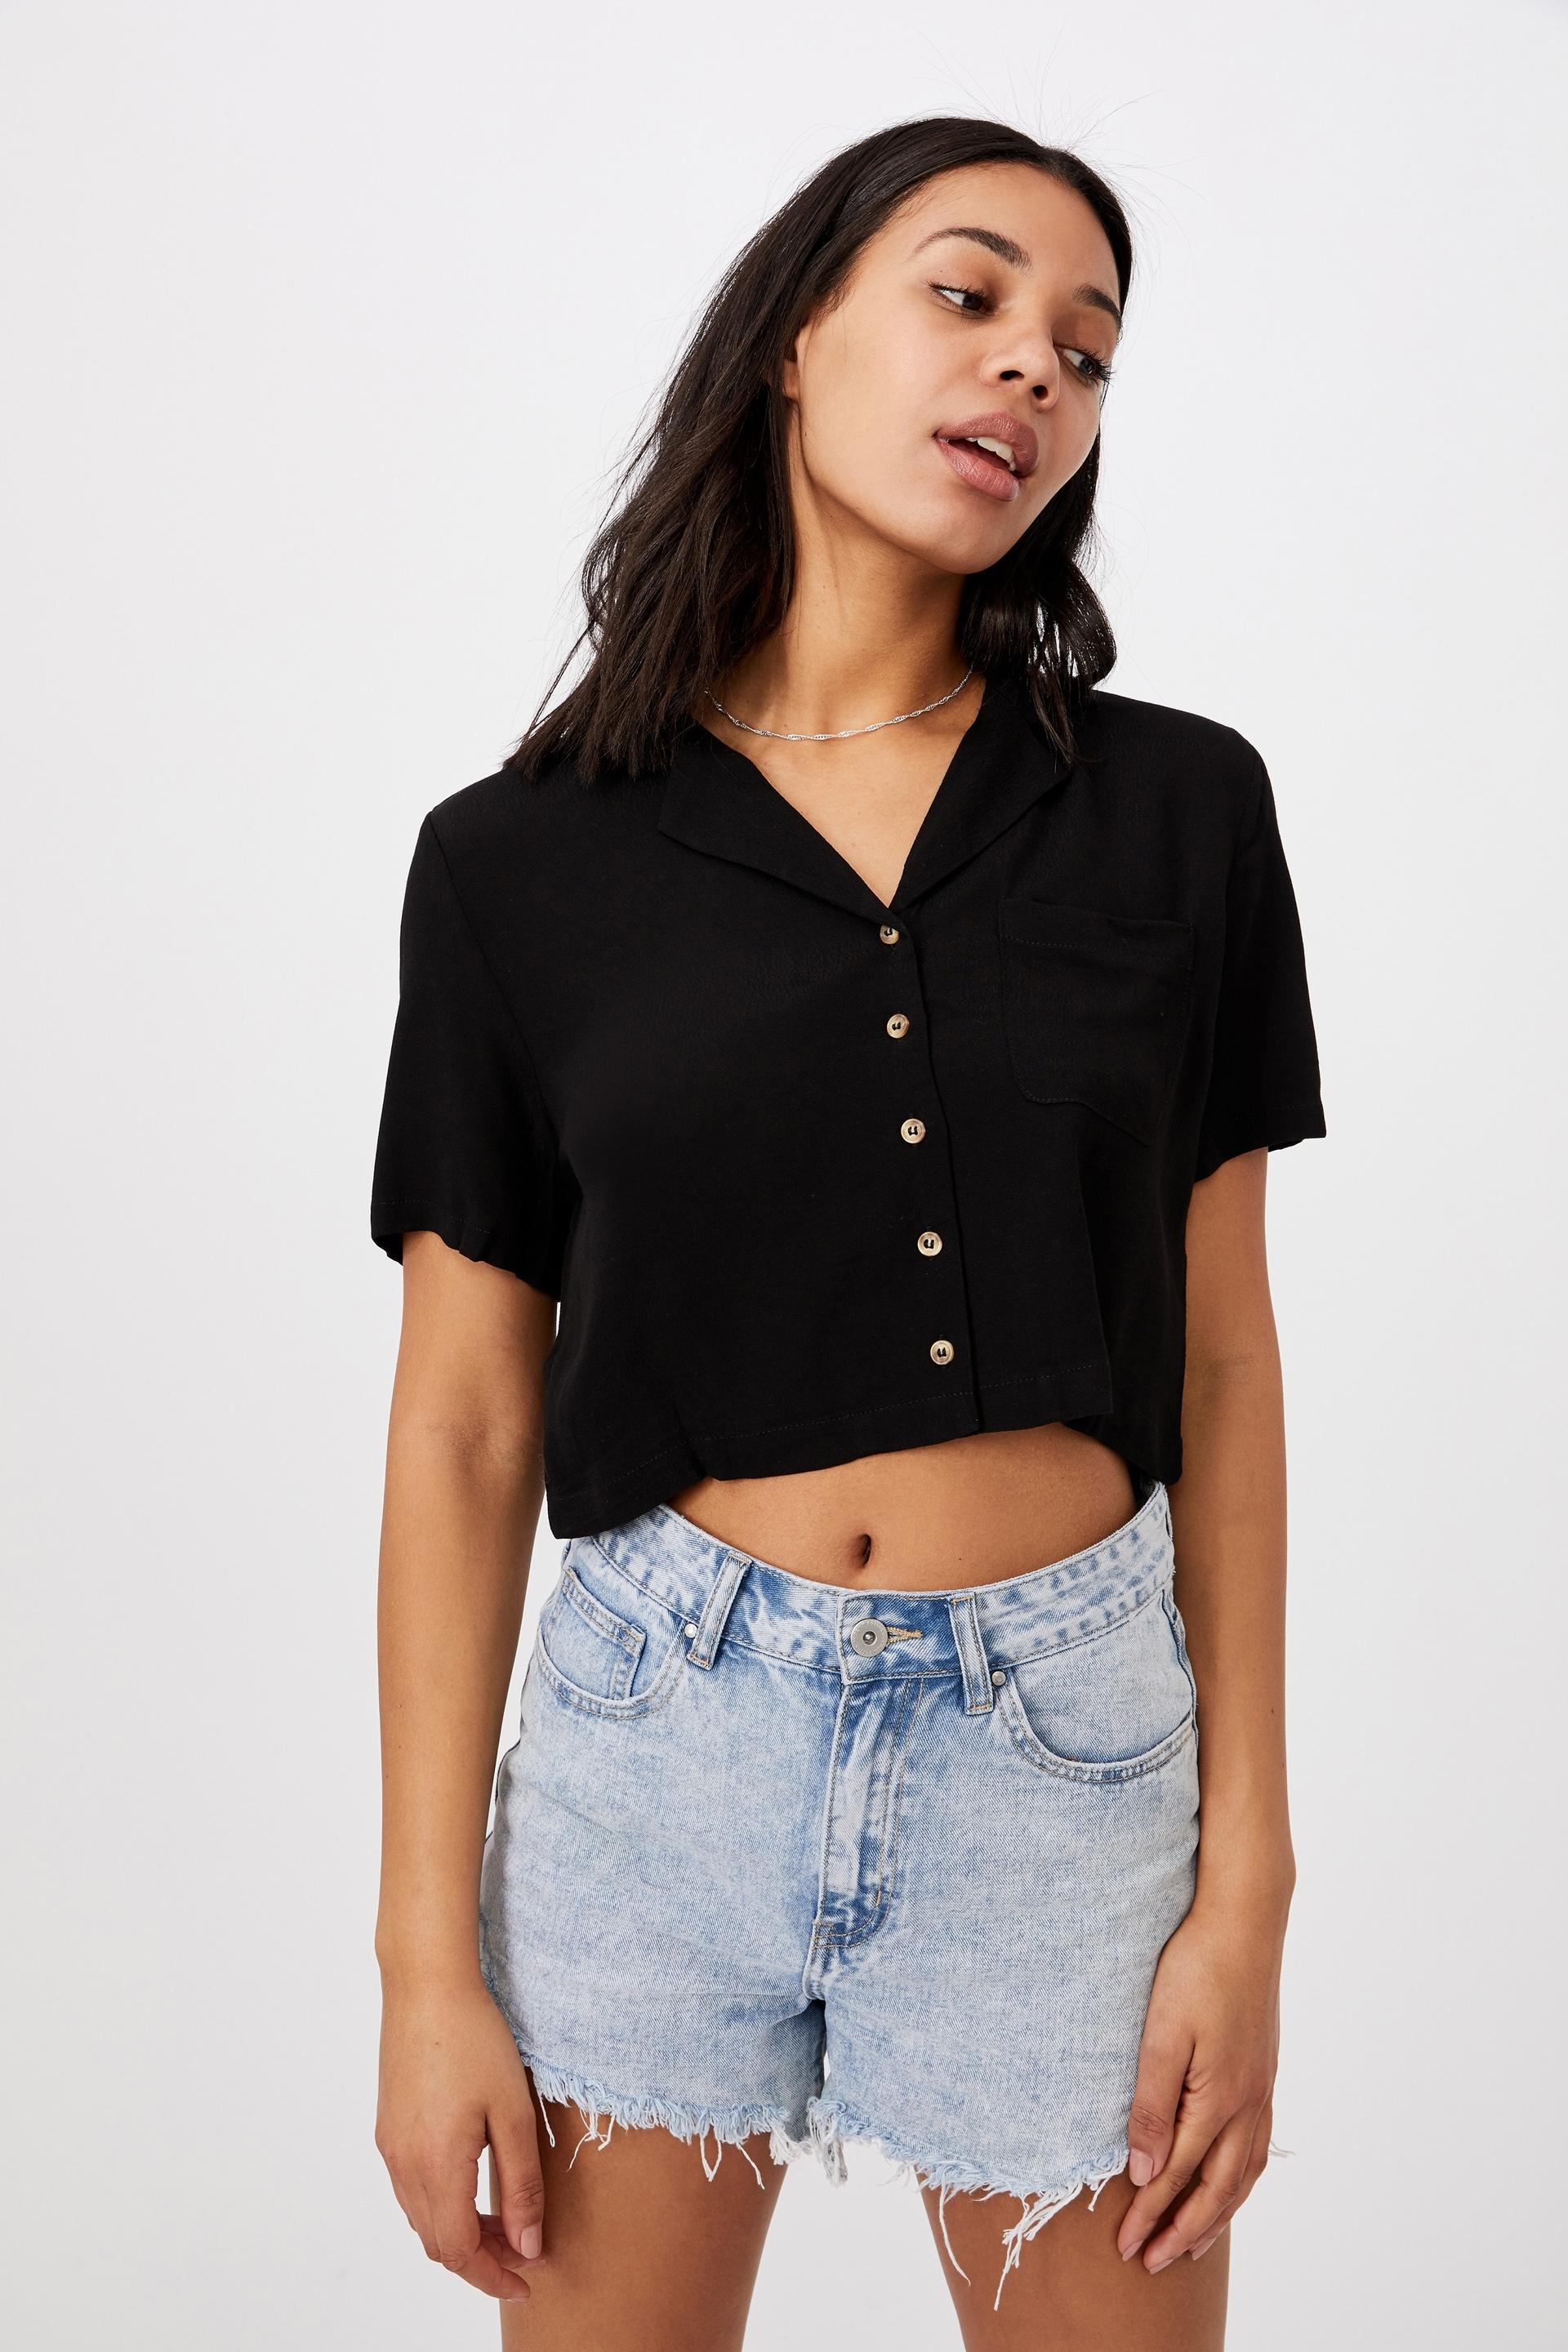 Cropped summer shirt - black Cotton On Shirts | Superbalist.com